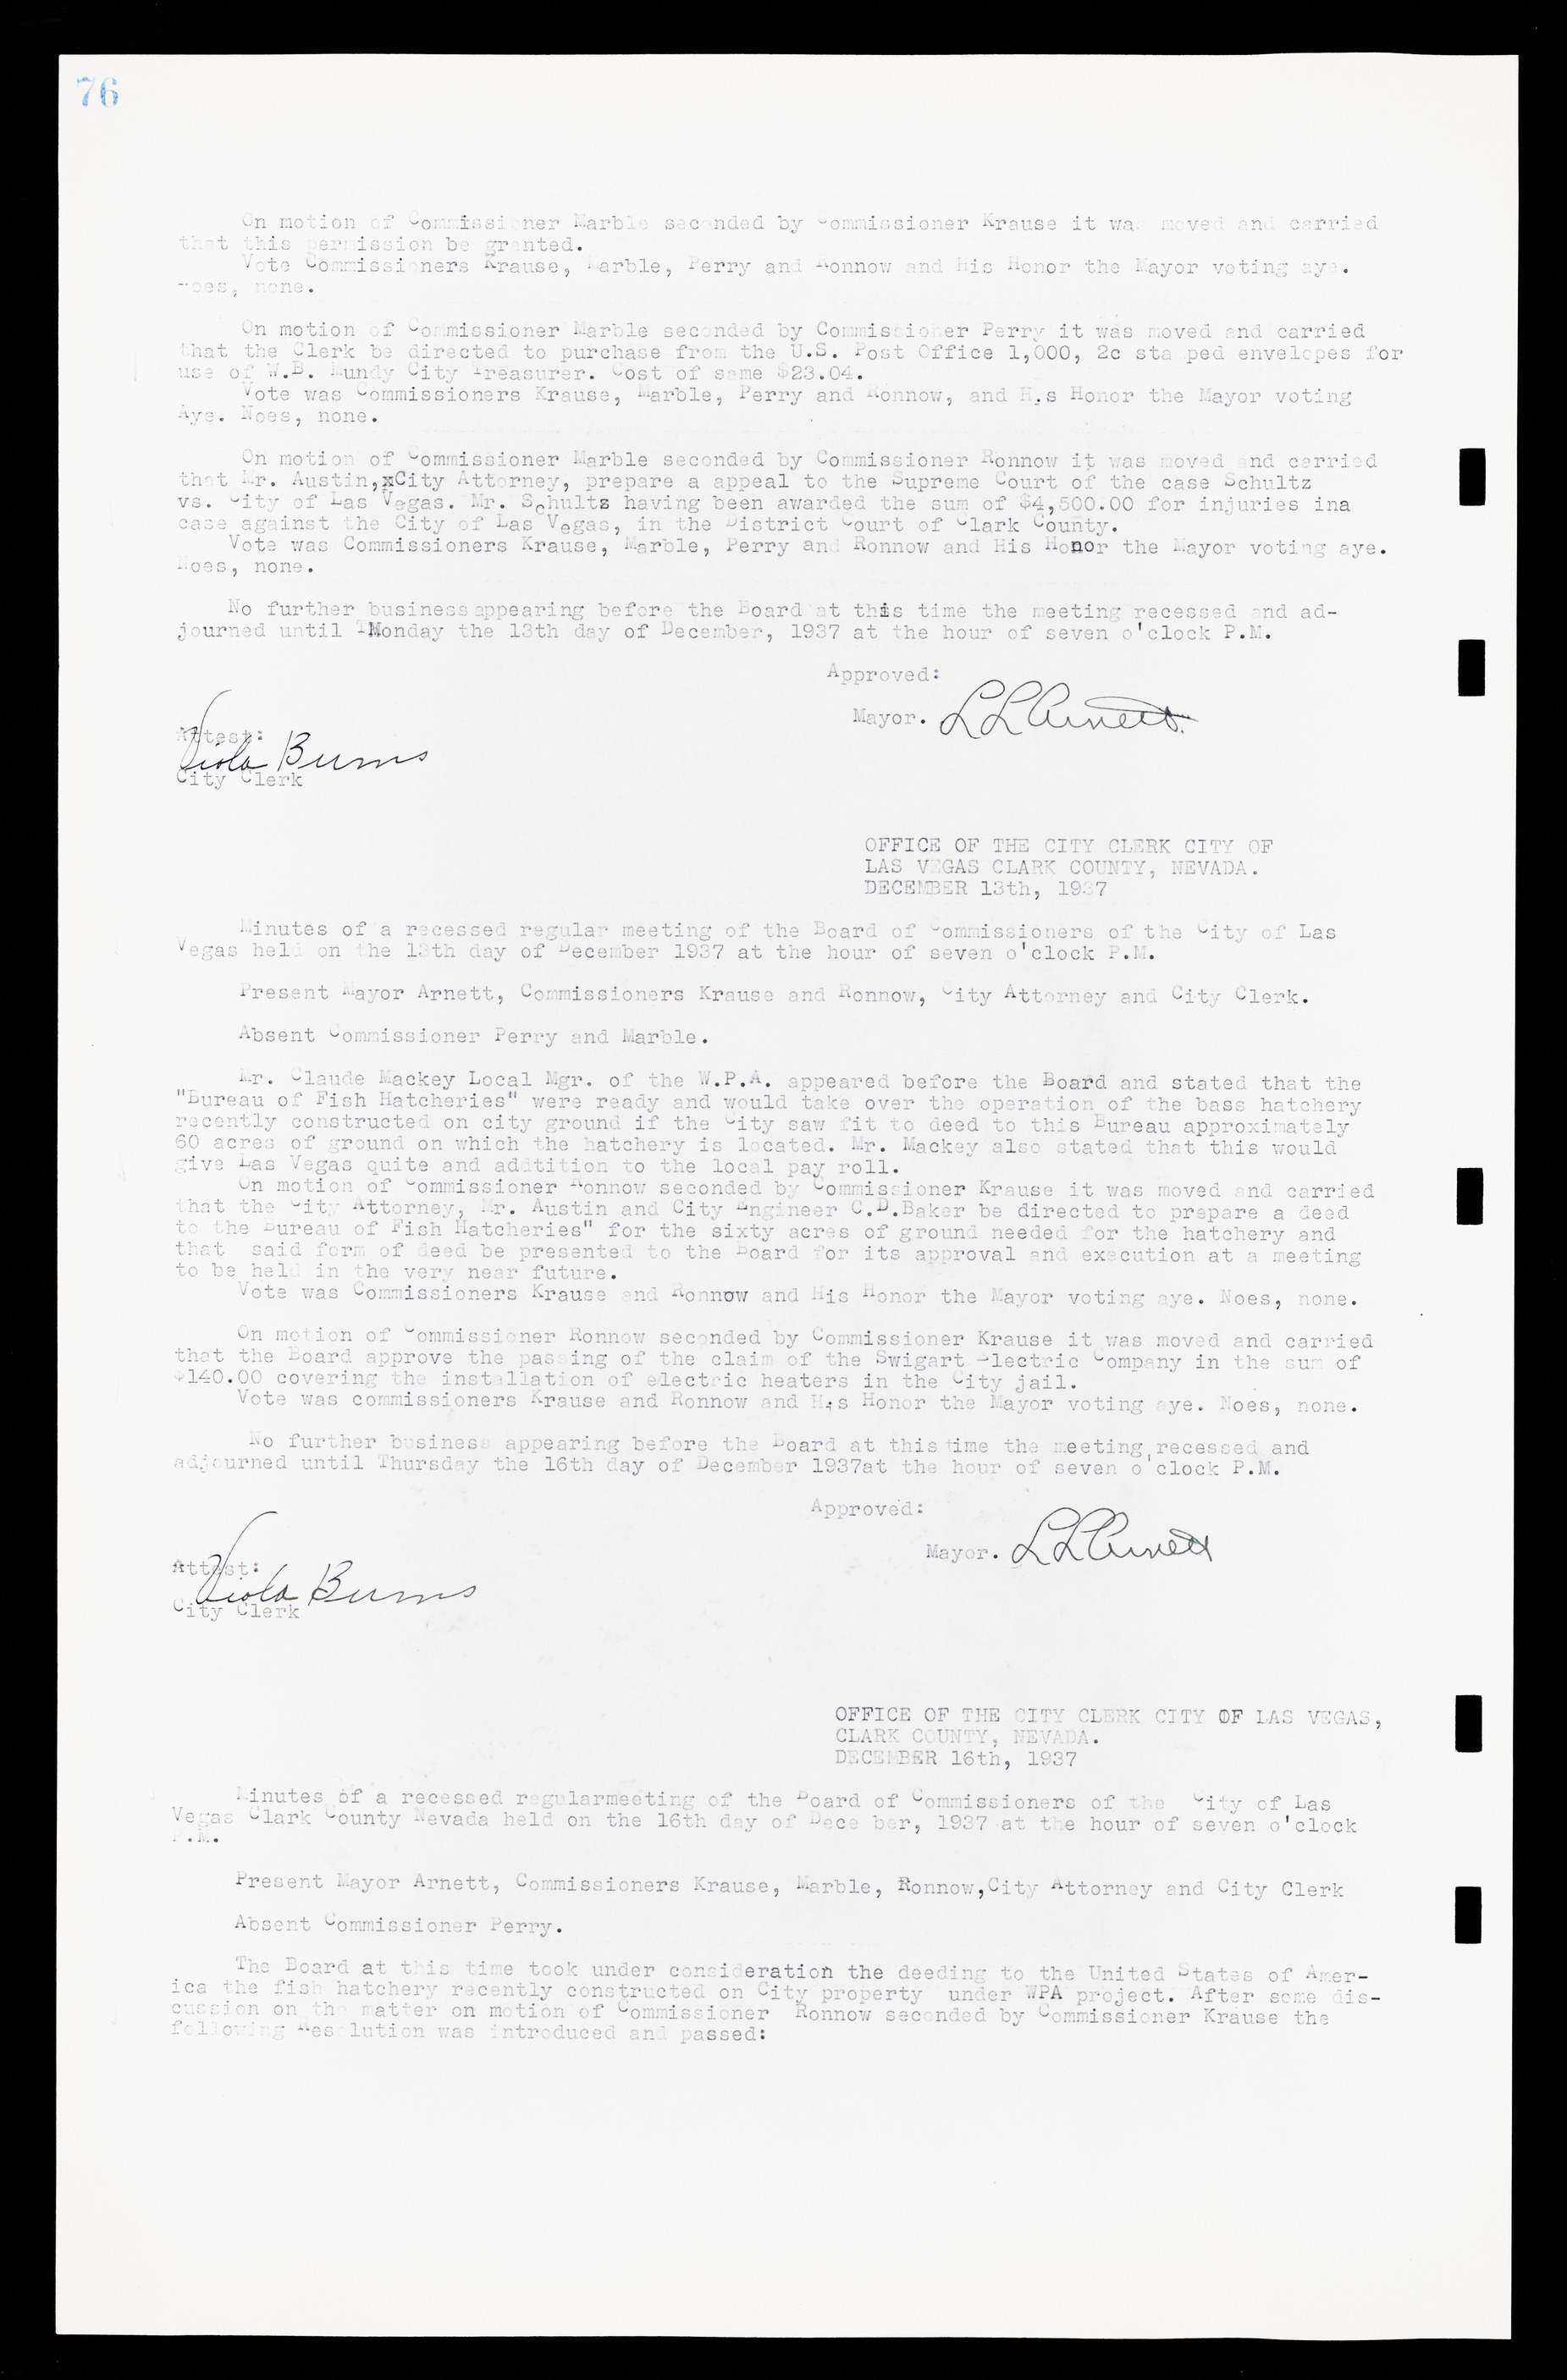 Las Vegas City Commission Minutes, February 17, 1937 to August 4, 1942, lvc000004-85